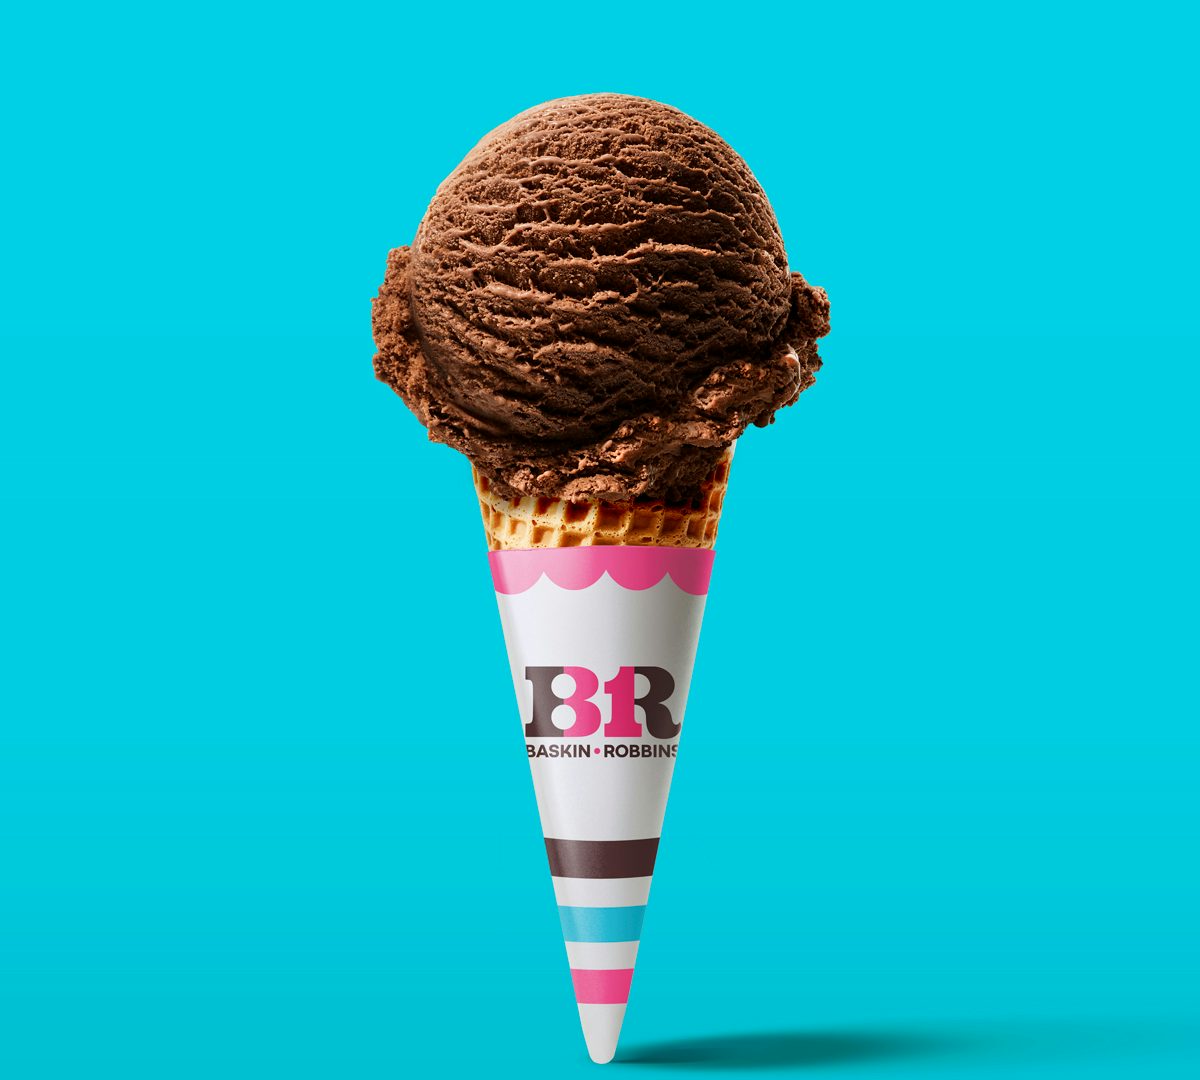 Baskin Robbins rebrand